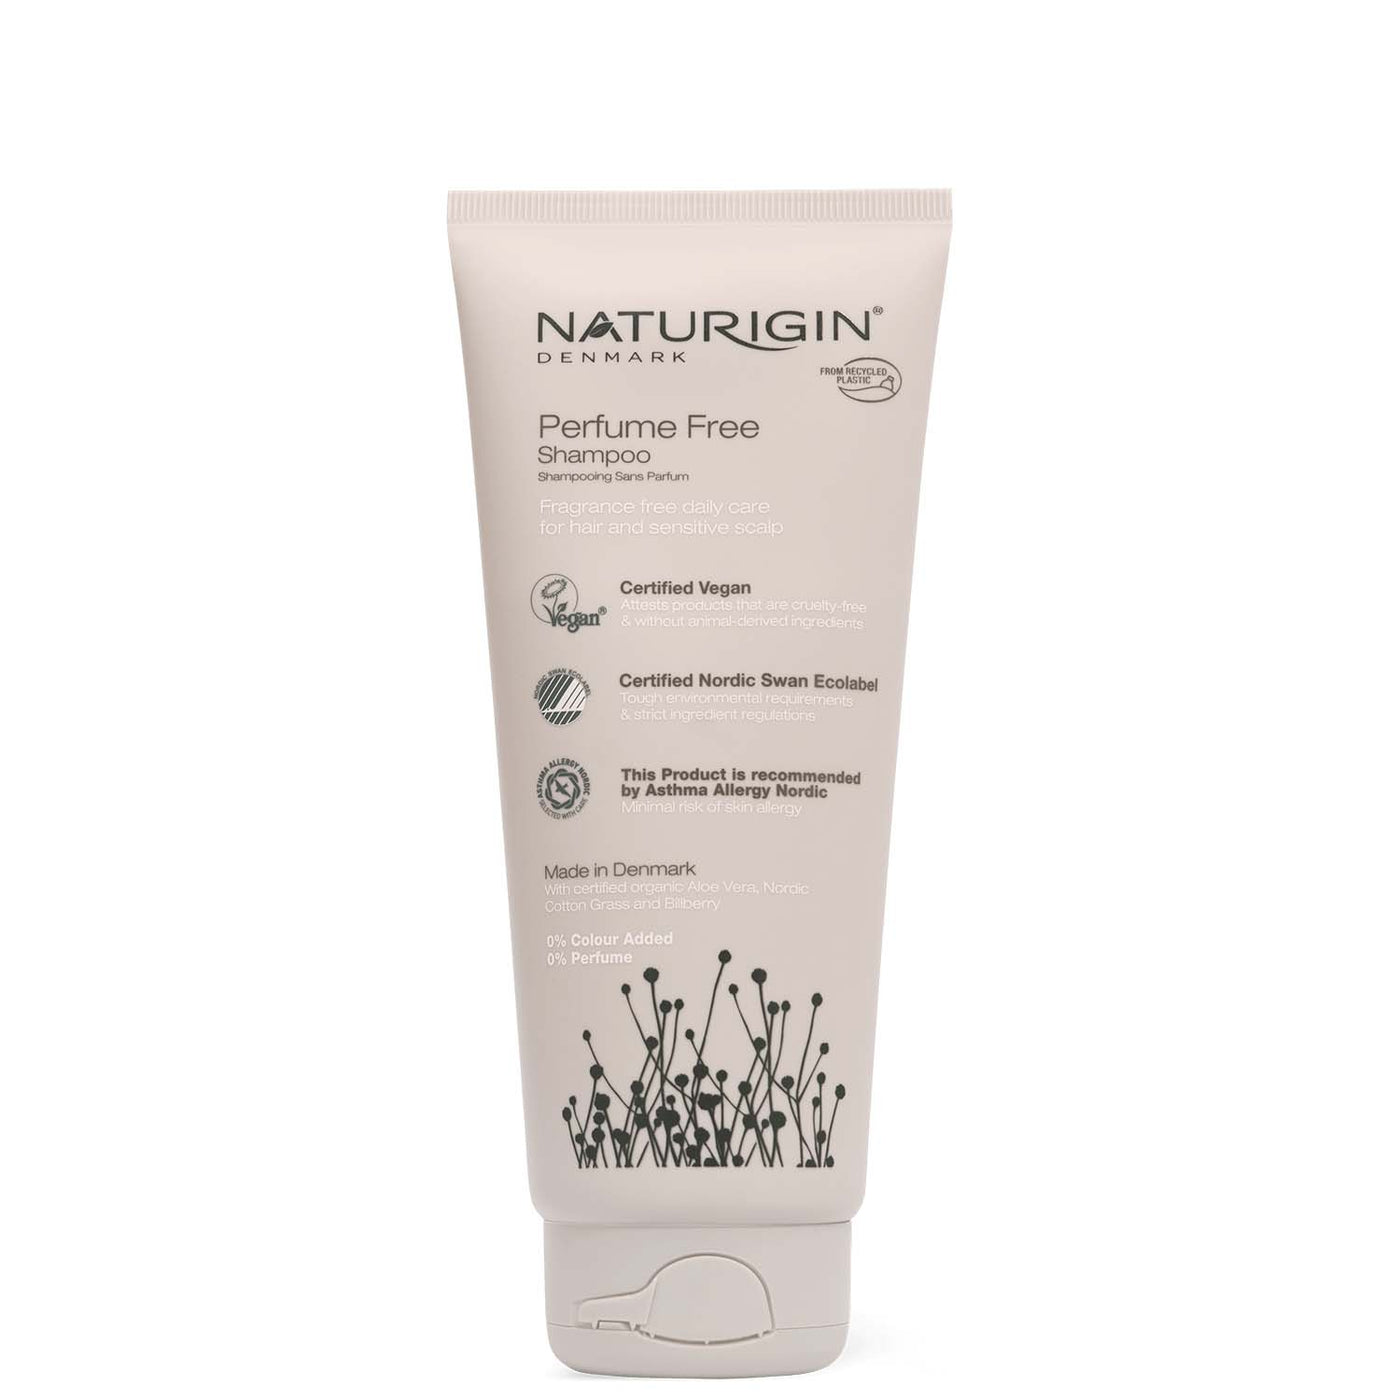 Naturigin Perfume Free Shampoo (200ml)